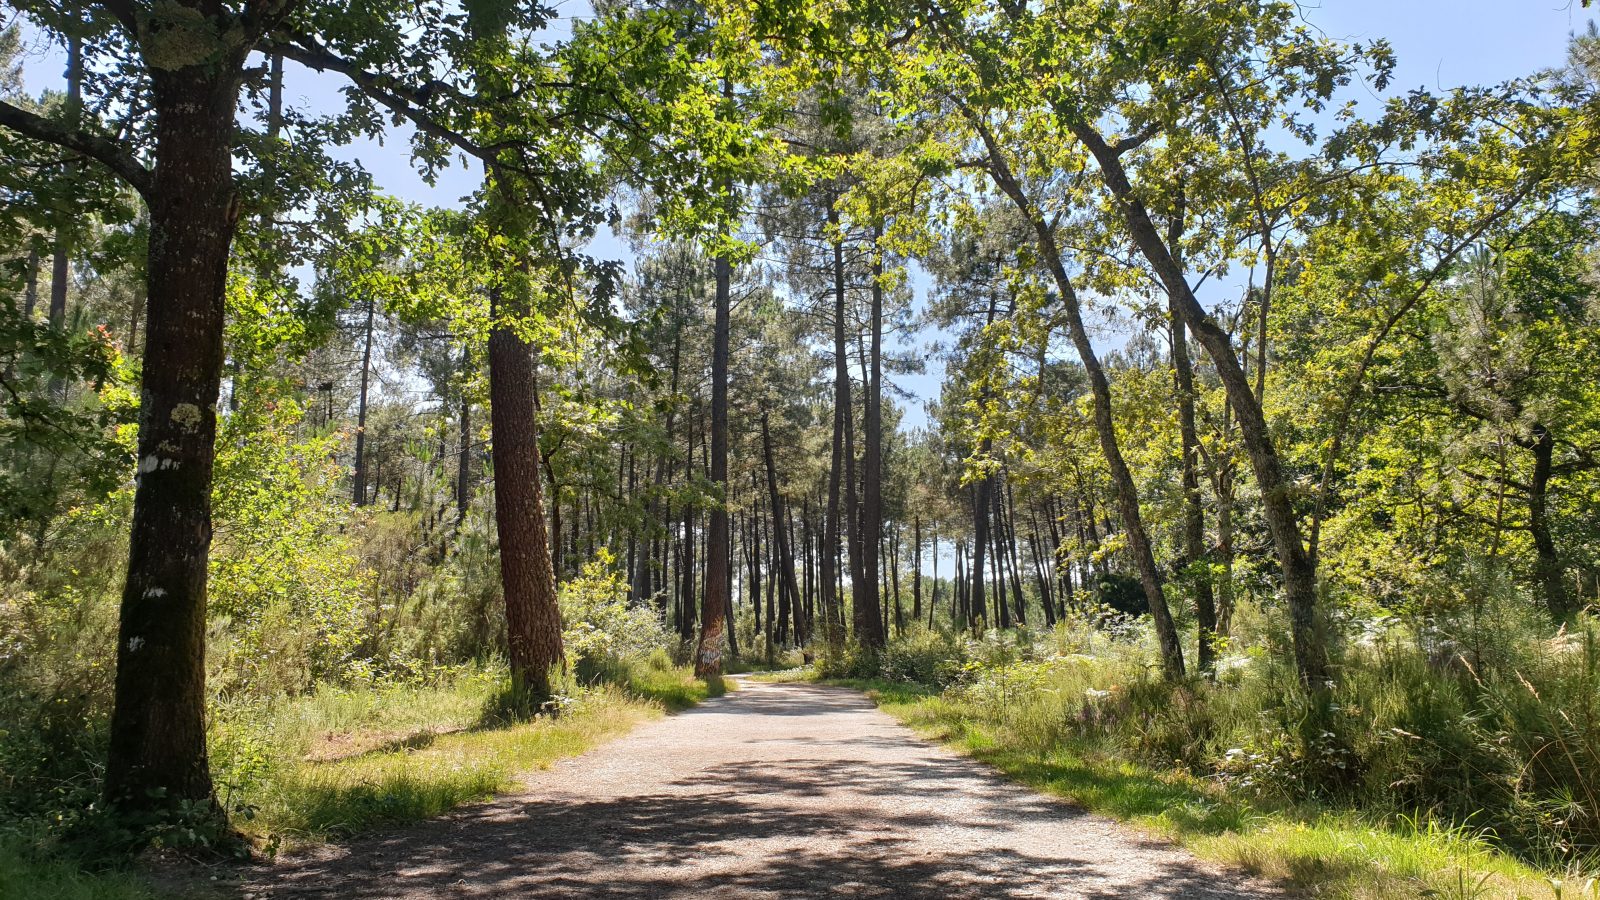 Roller ride: Migelane Forest – El paseo geológico